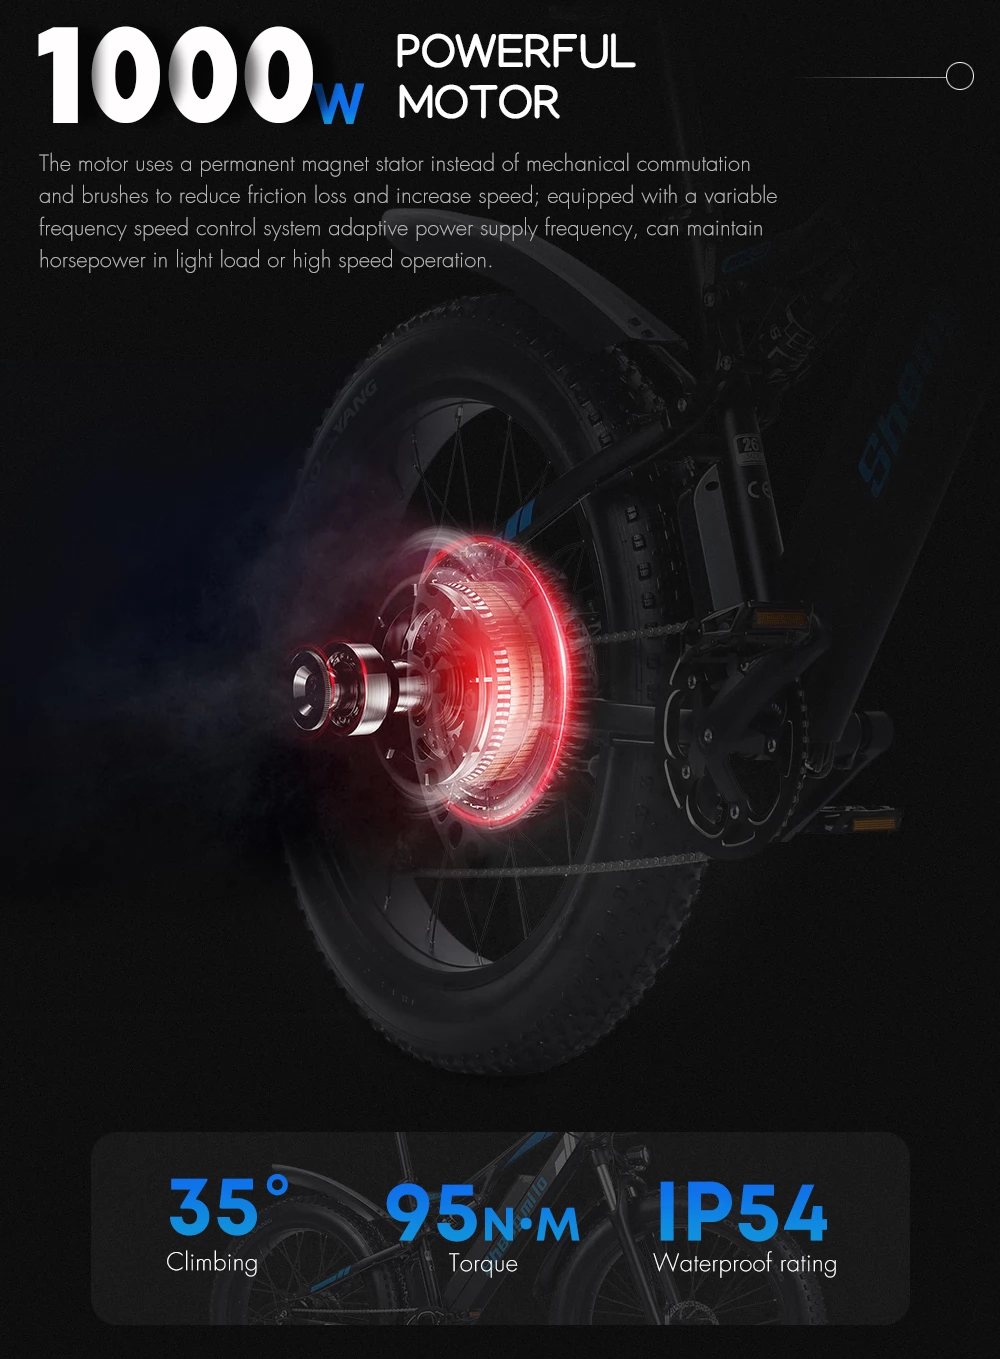 Shengmilo MX03 26 Inch Fat Tires Electric Bike - 48V 1000W Brushless Motor & 17Ah Battery